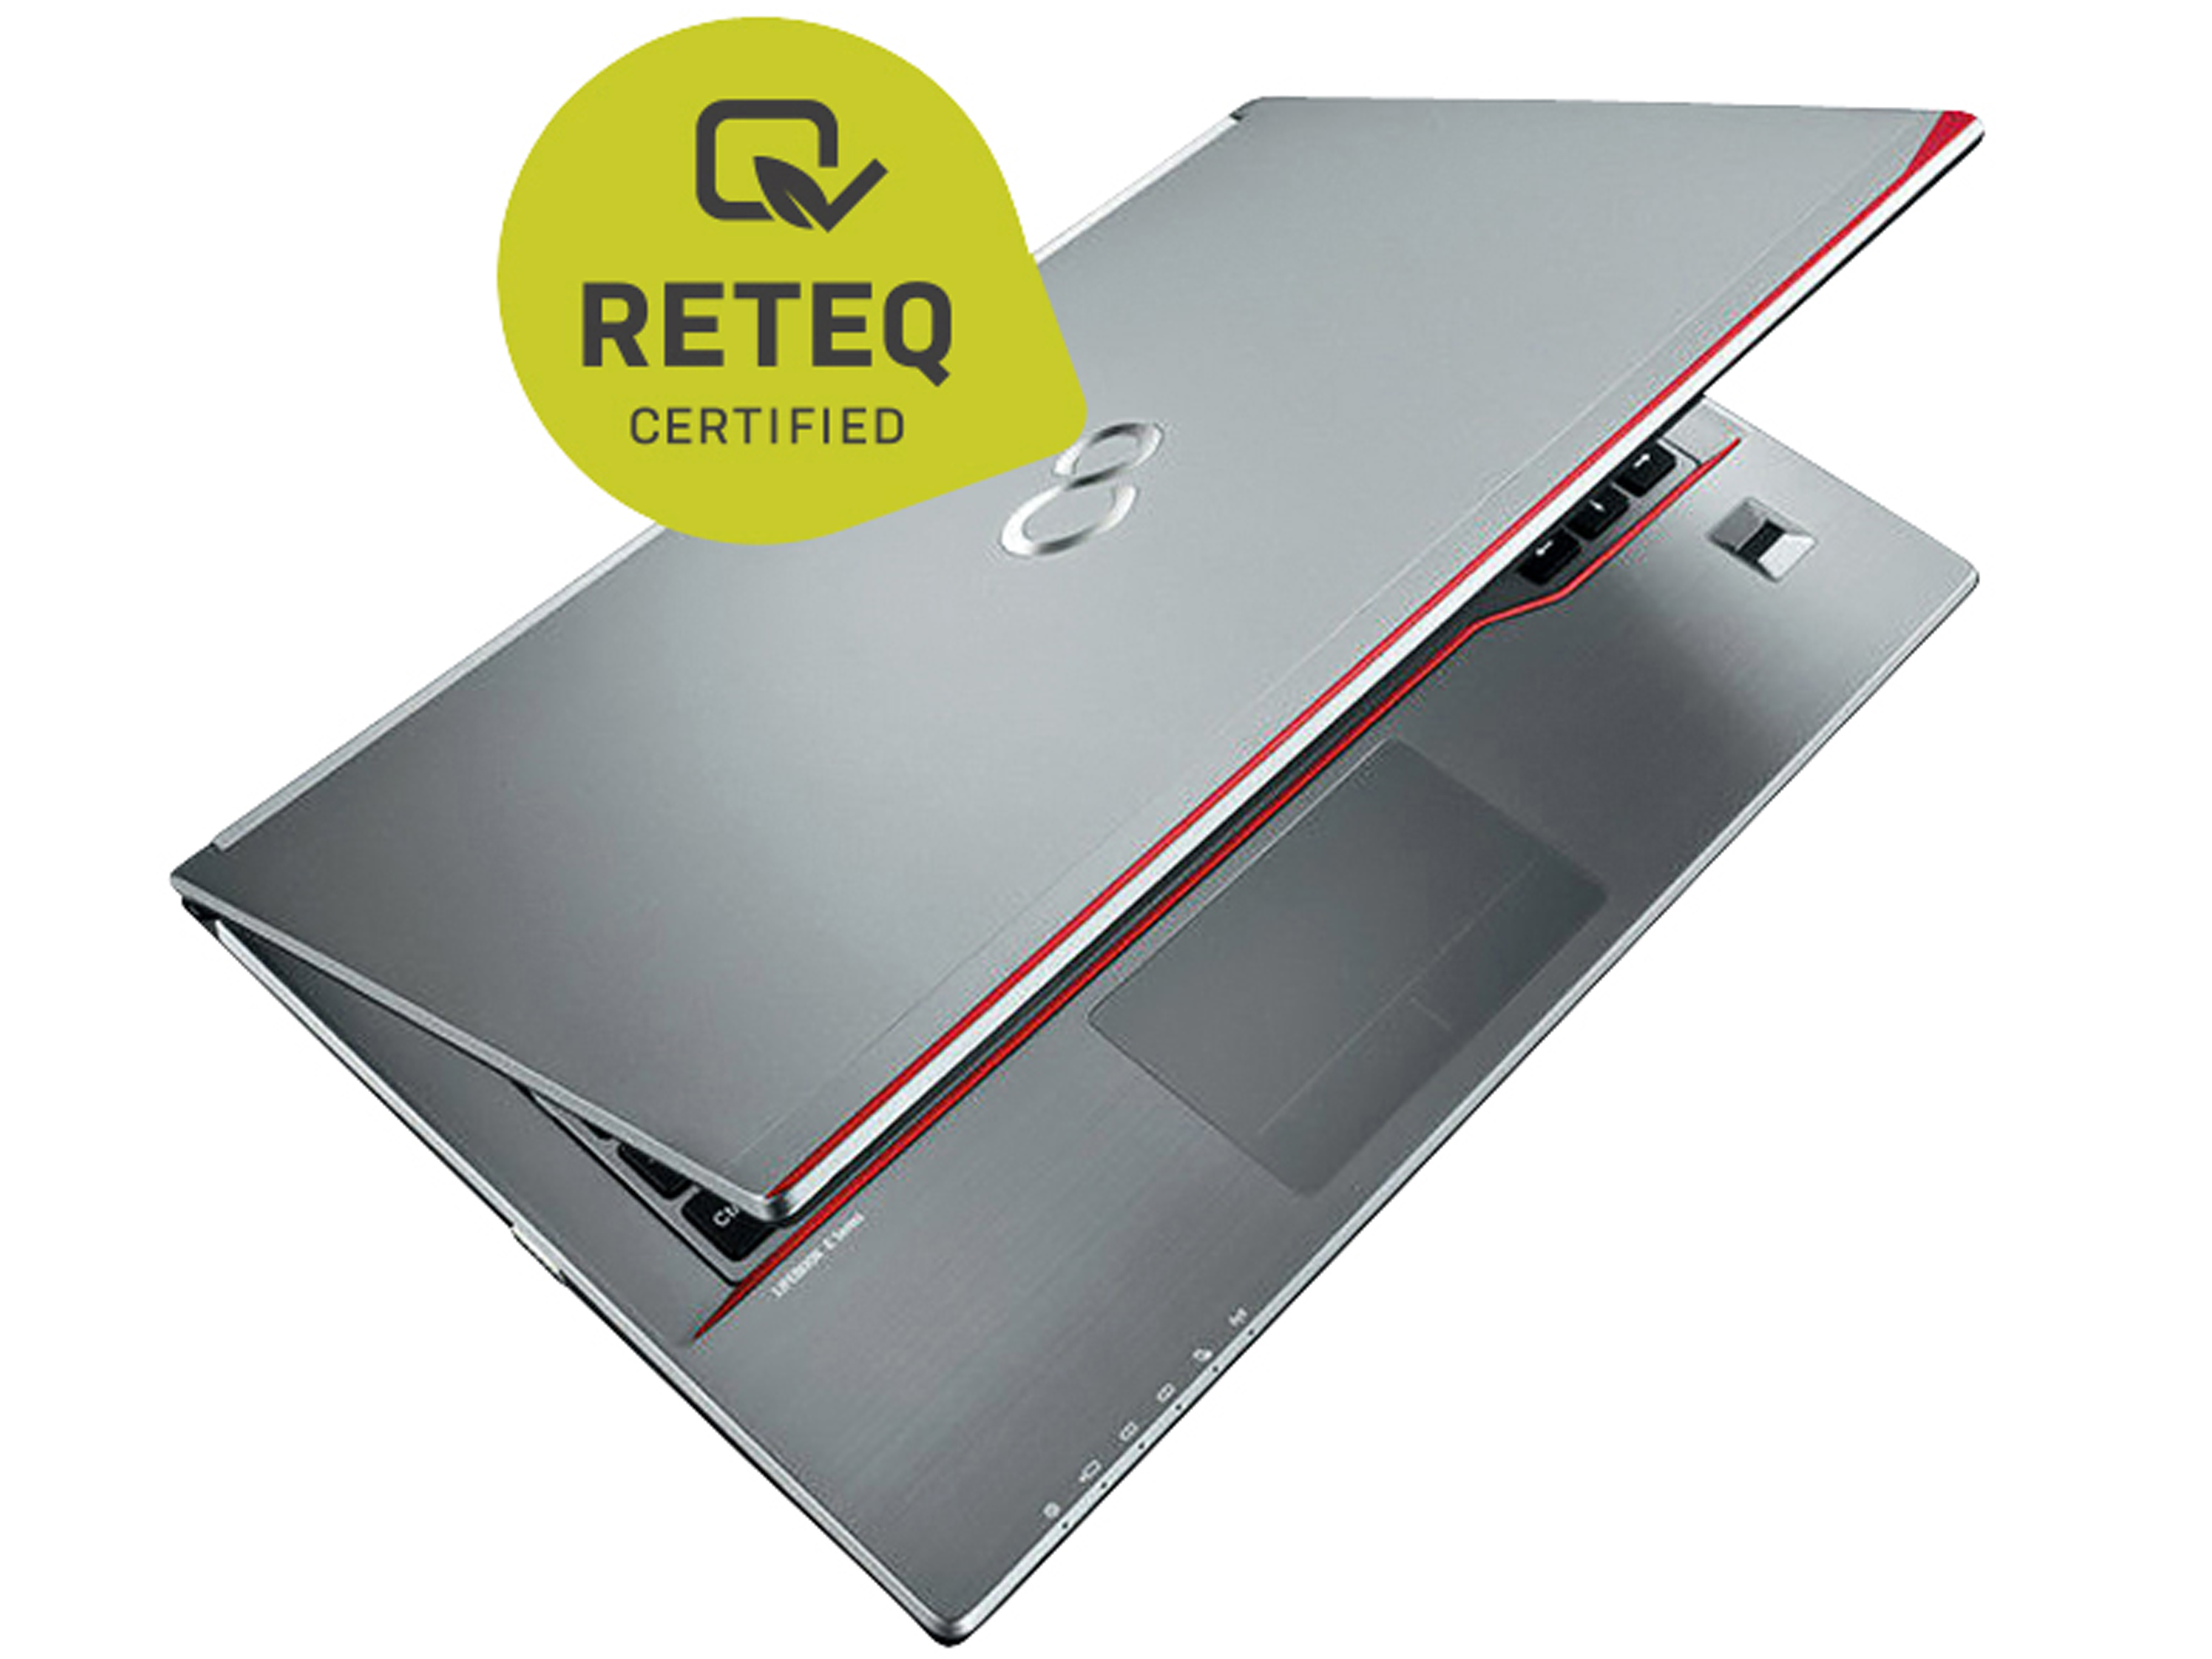 FUJITSU Notebook Lifebook E746, 35,56 cm (14"), i5, 8GB, 256 GB, Win10 Home, refurbished